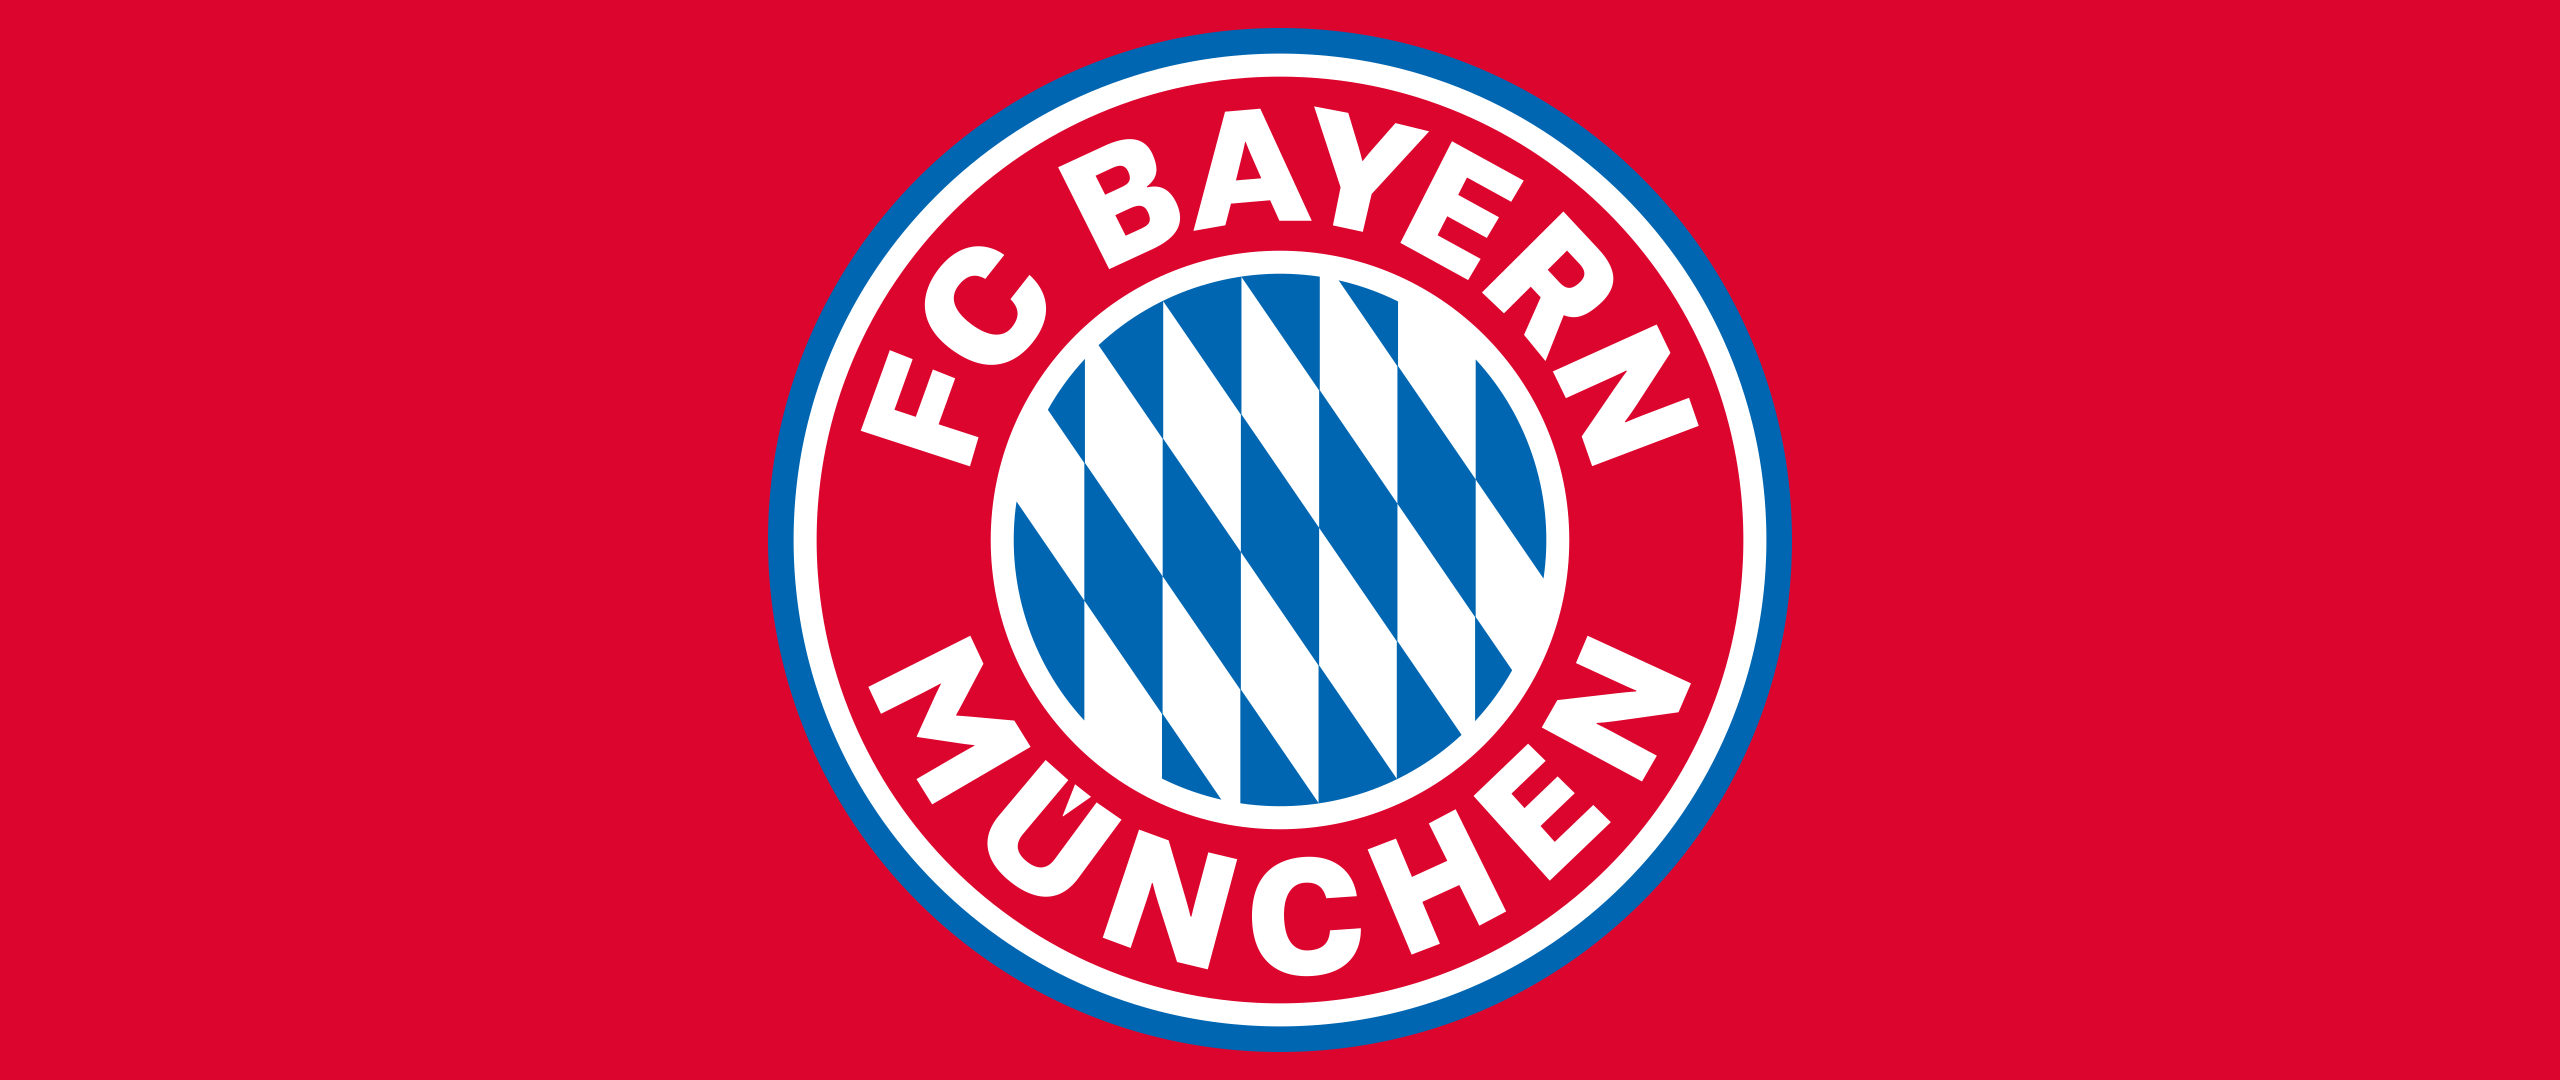 FC Bayern Munich Wallpaper 4K, Minimalist, Red background, 5K